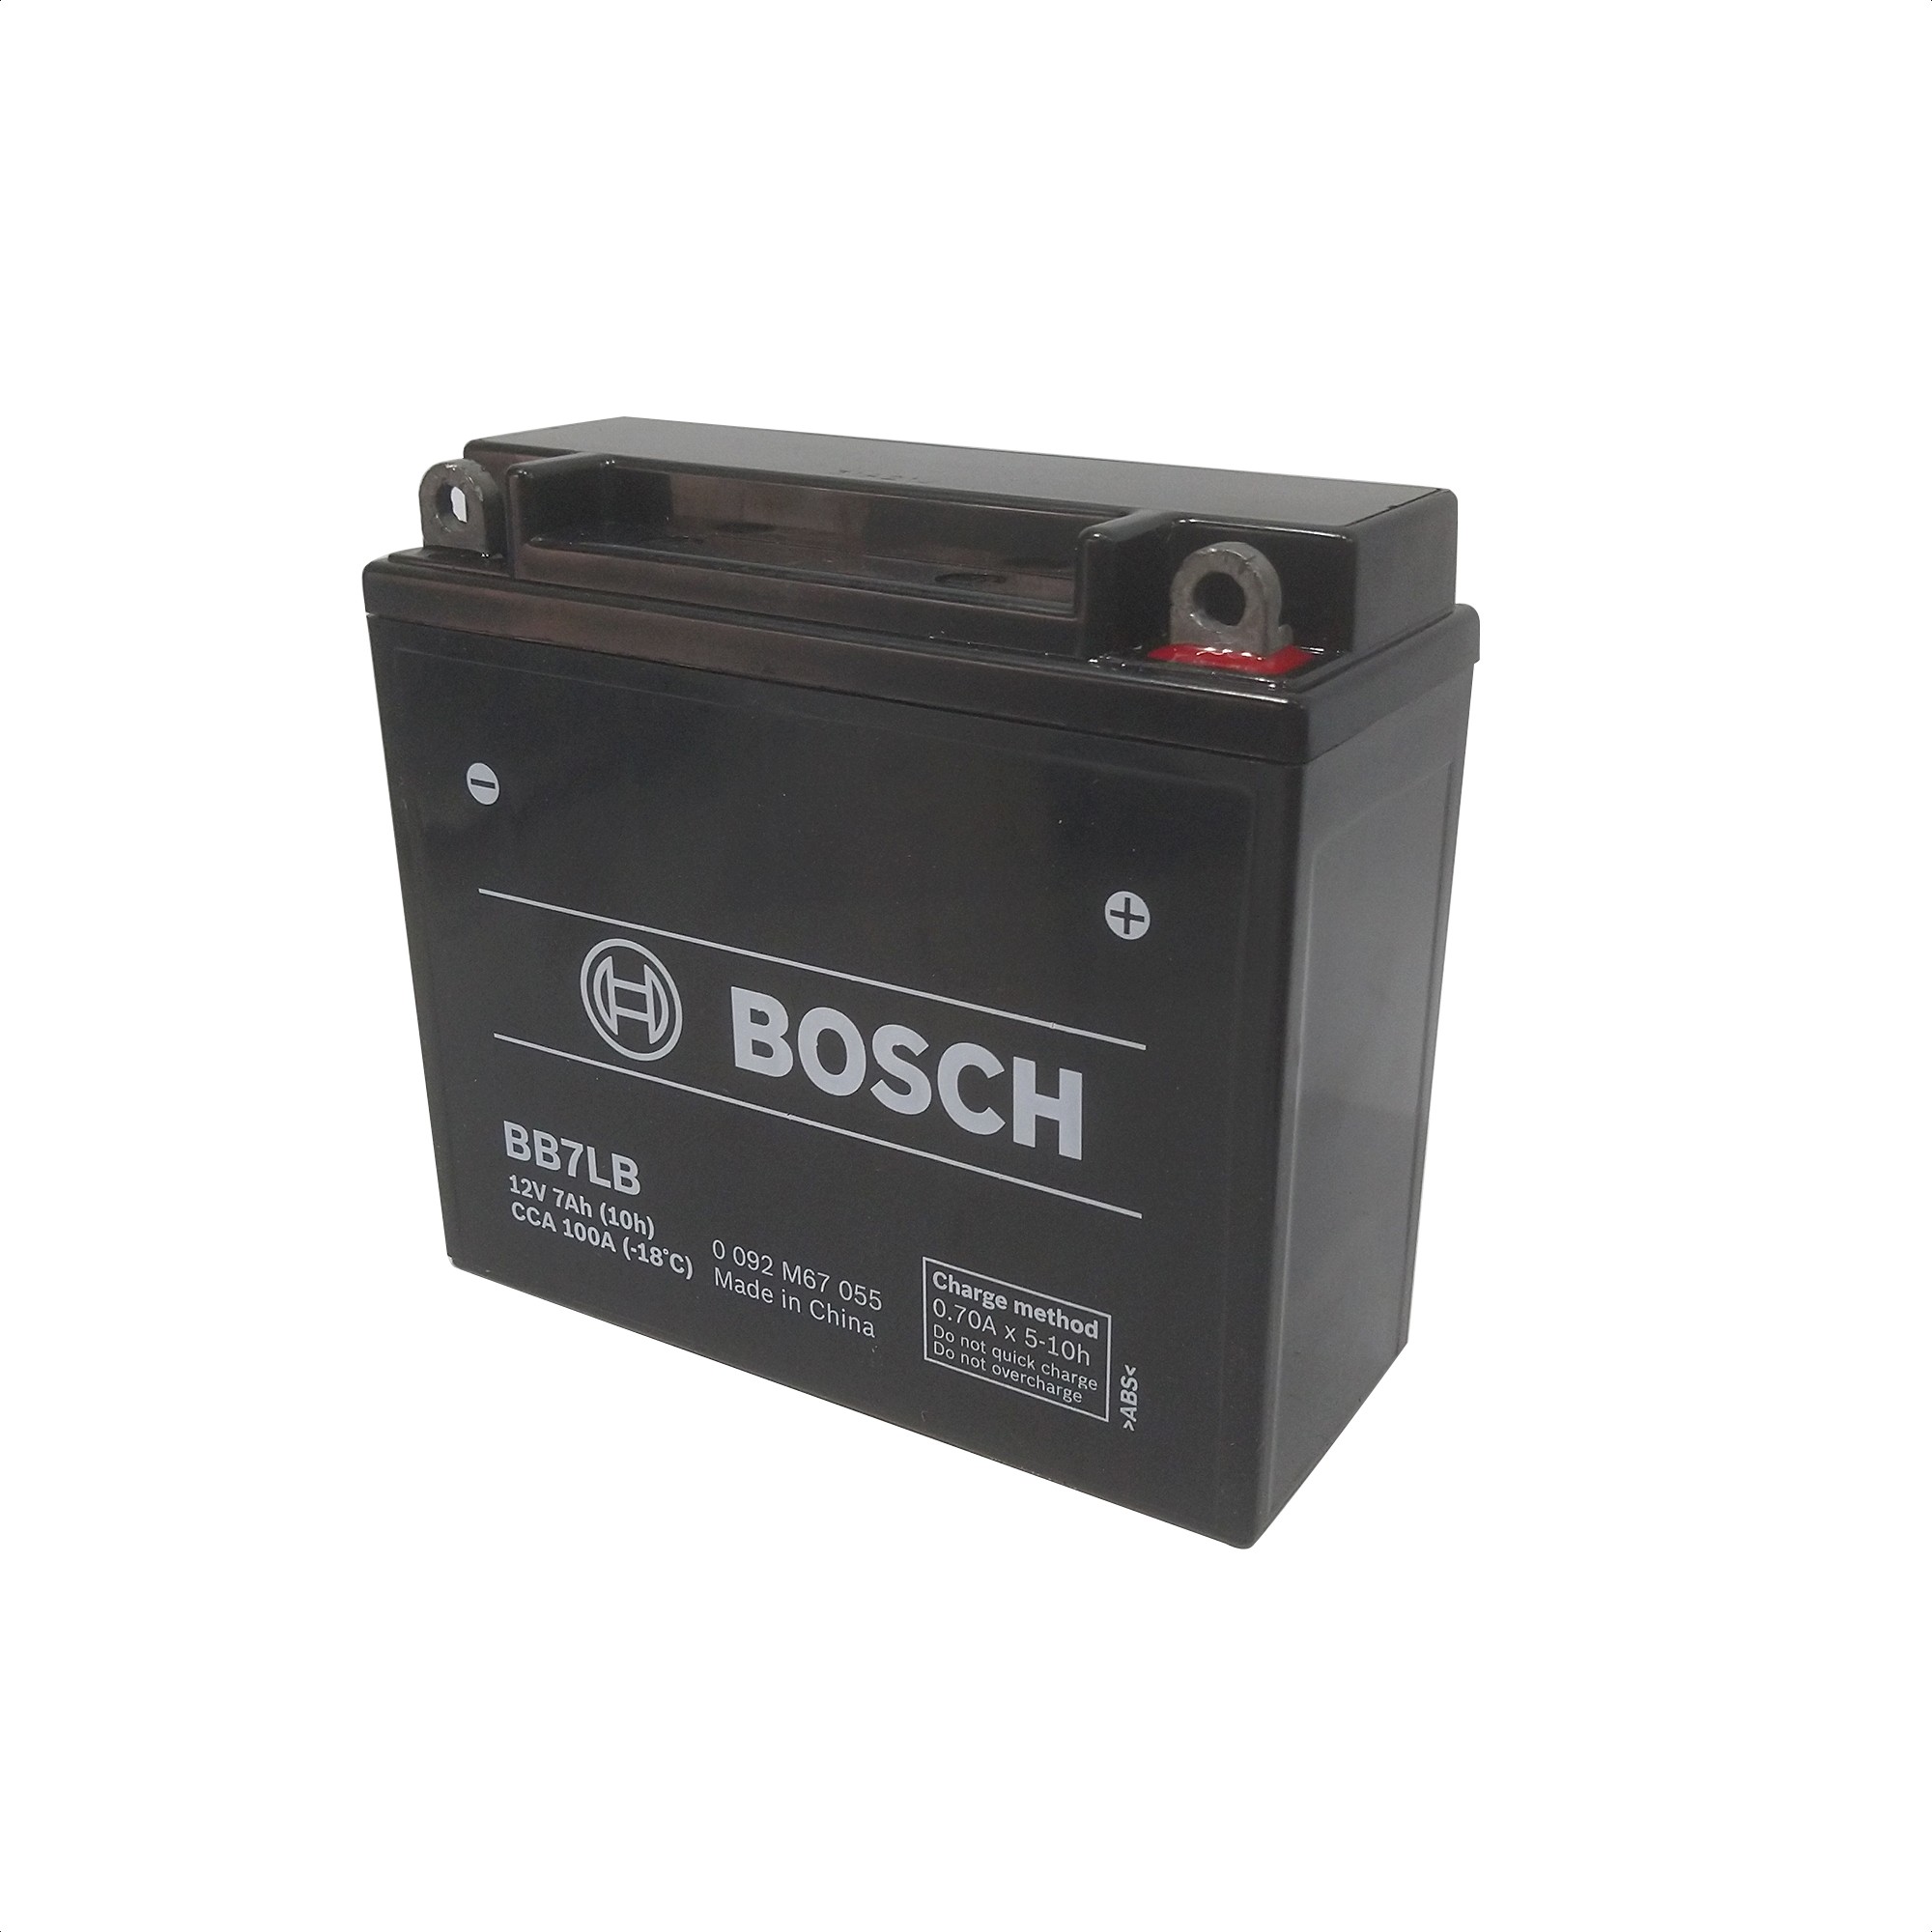 Bateria Gel Bosch Bb7lb 12n7a 3a